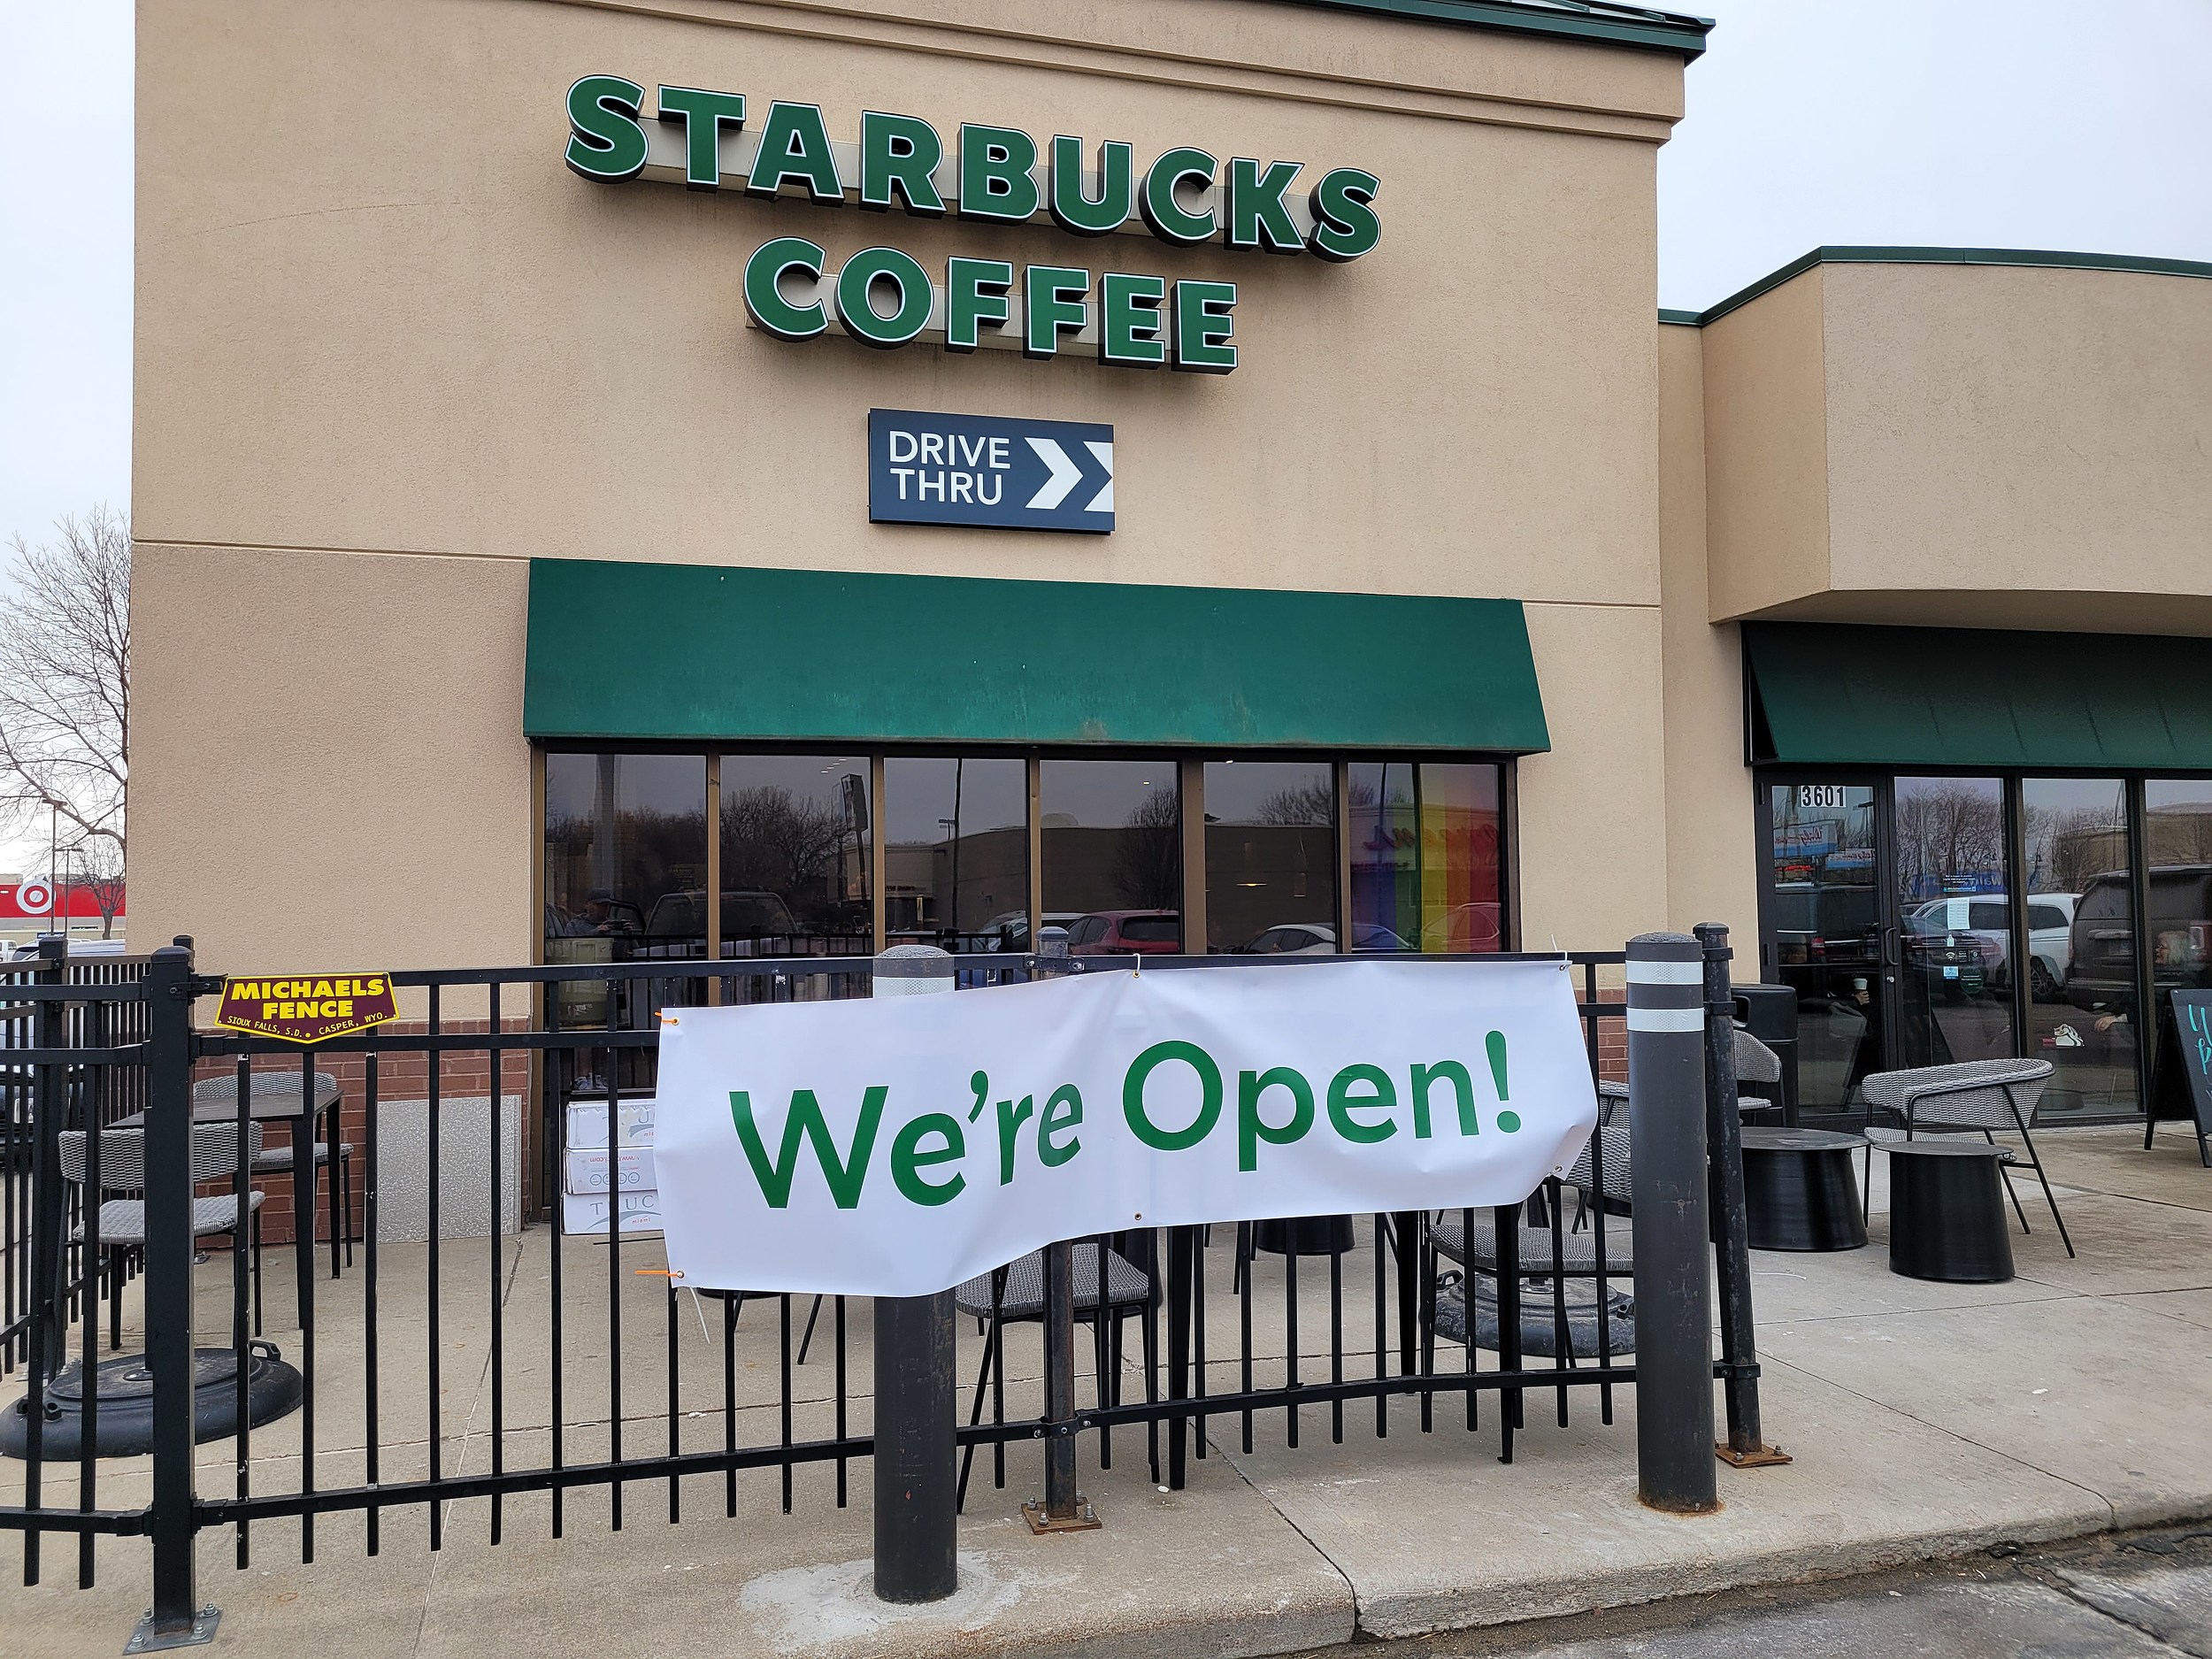 41st Starbucks in Sioux Falls is Back Open